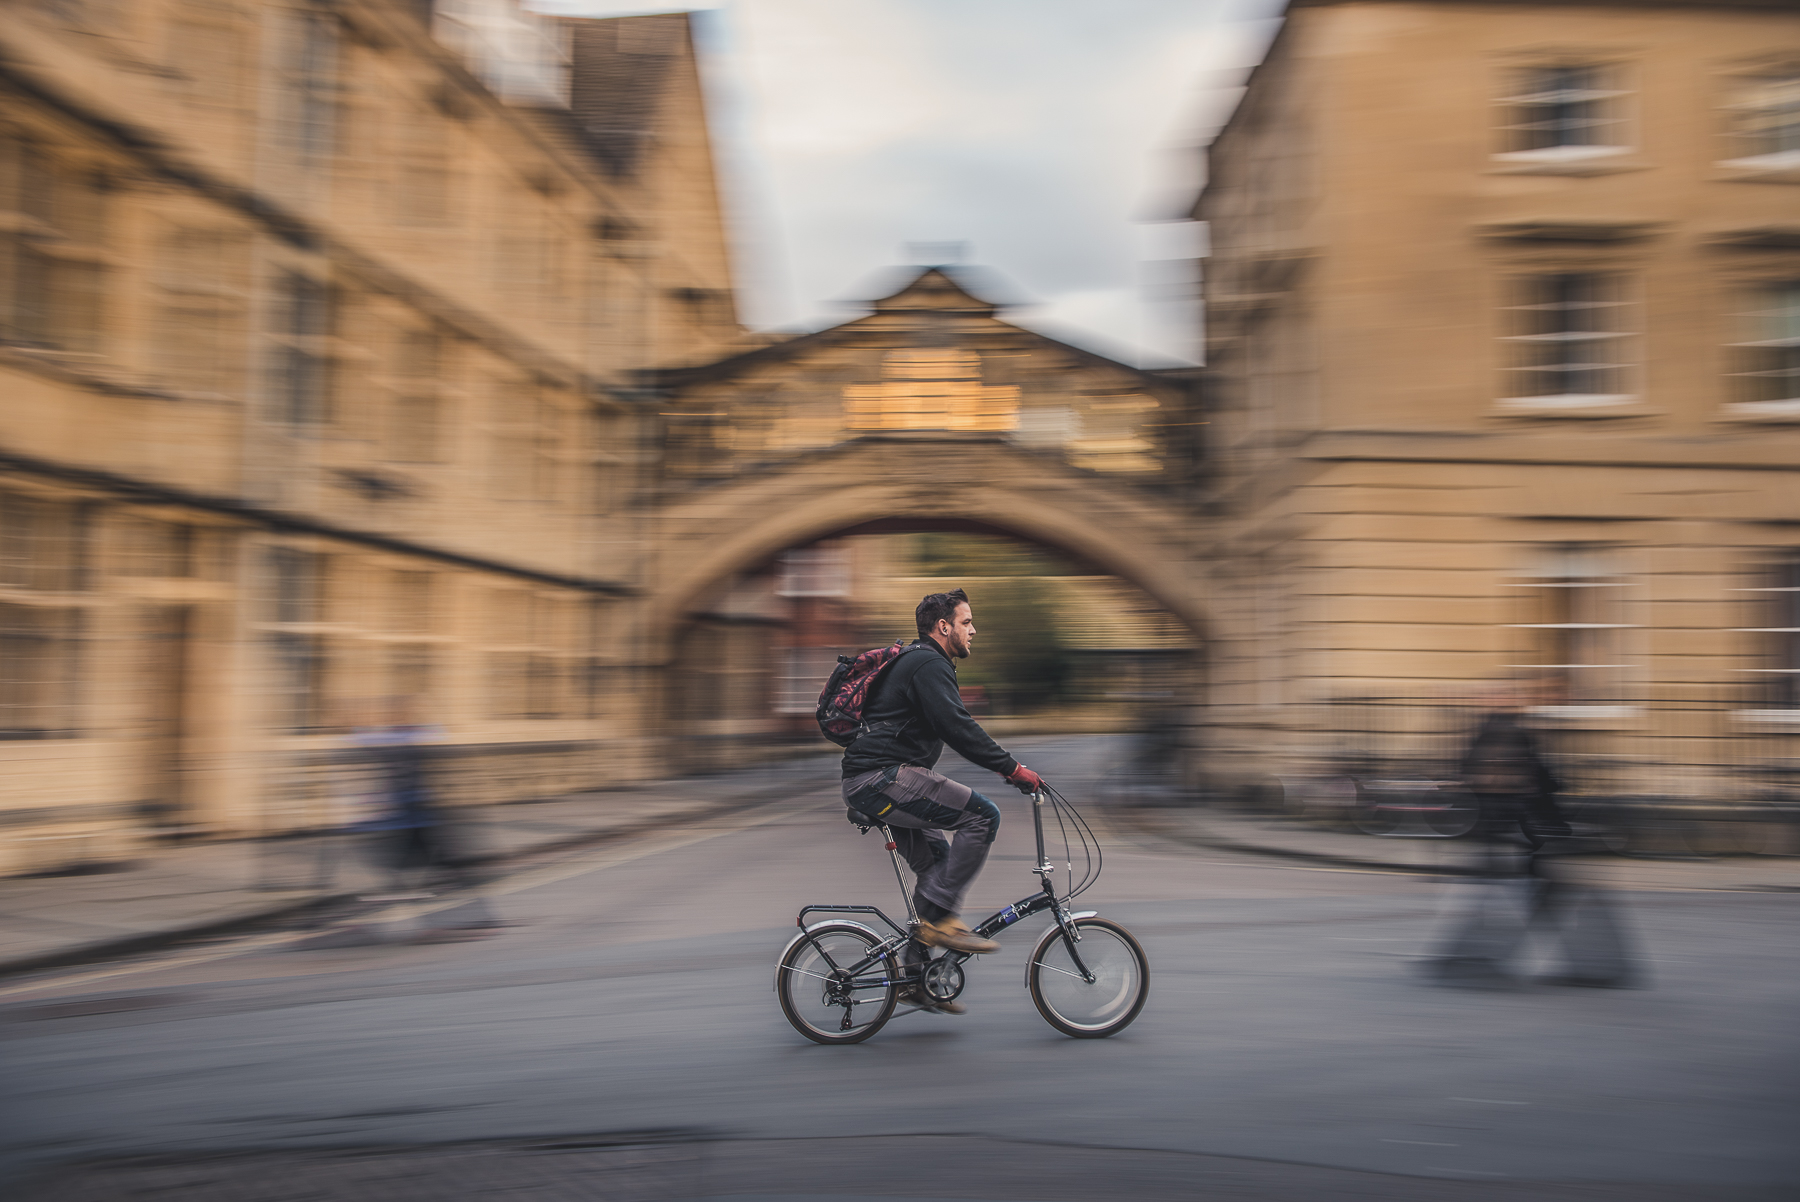 Oxford beginner Travel photography workshop